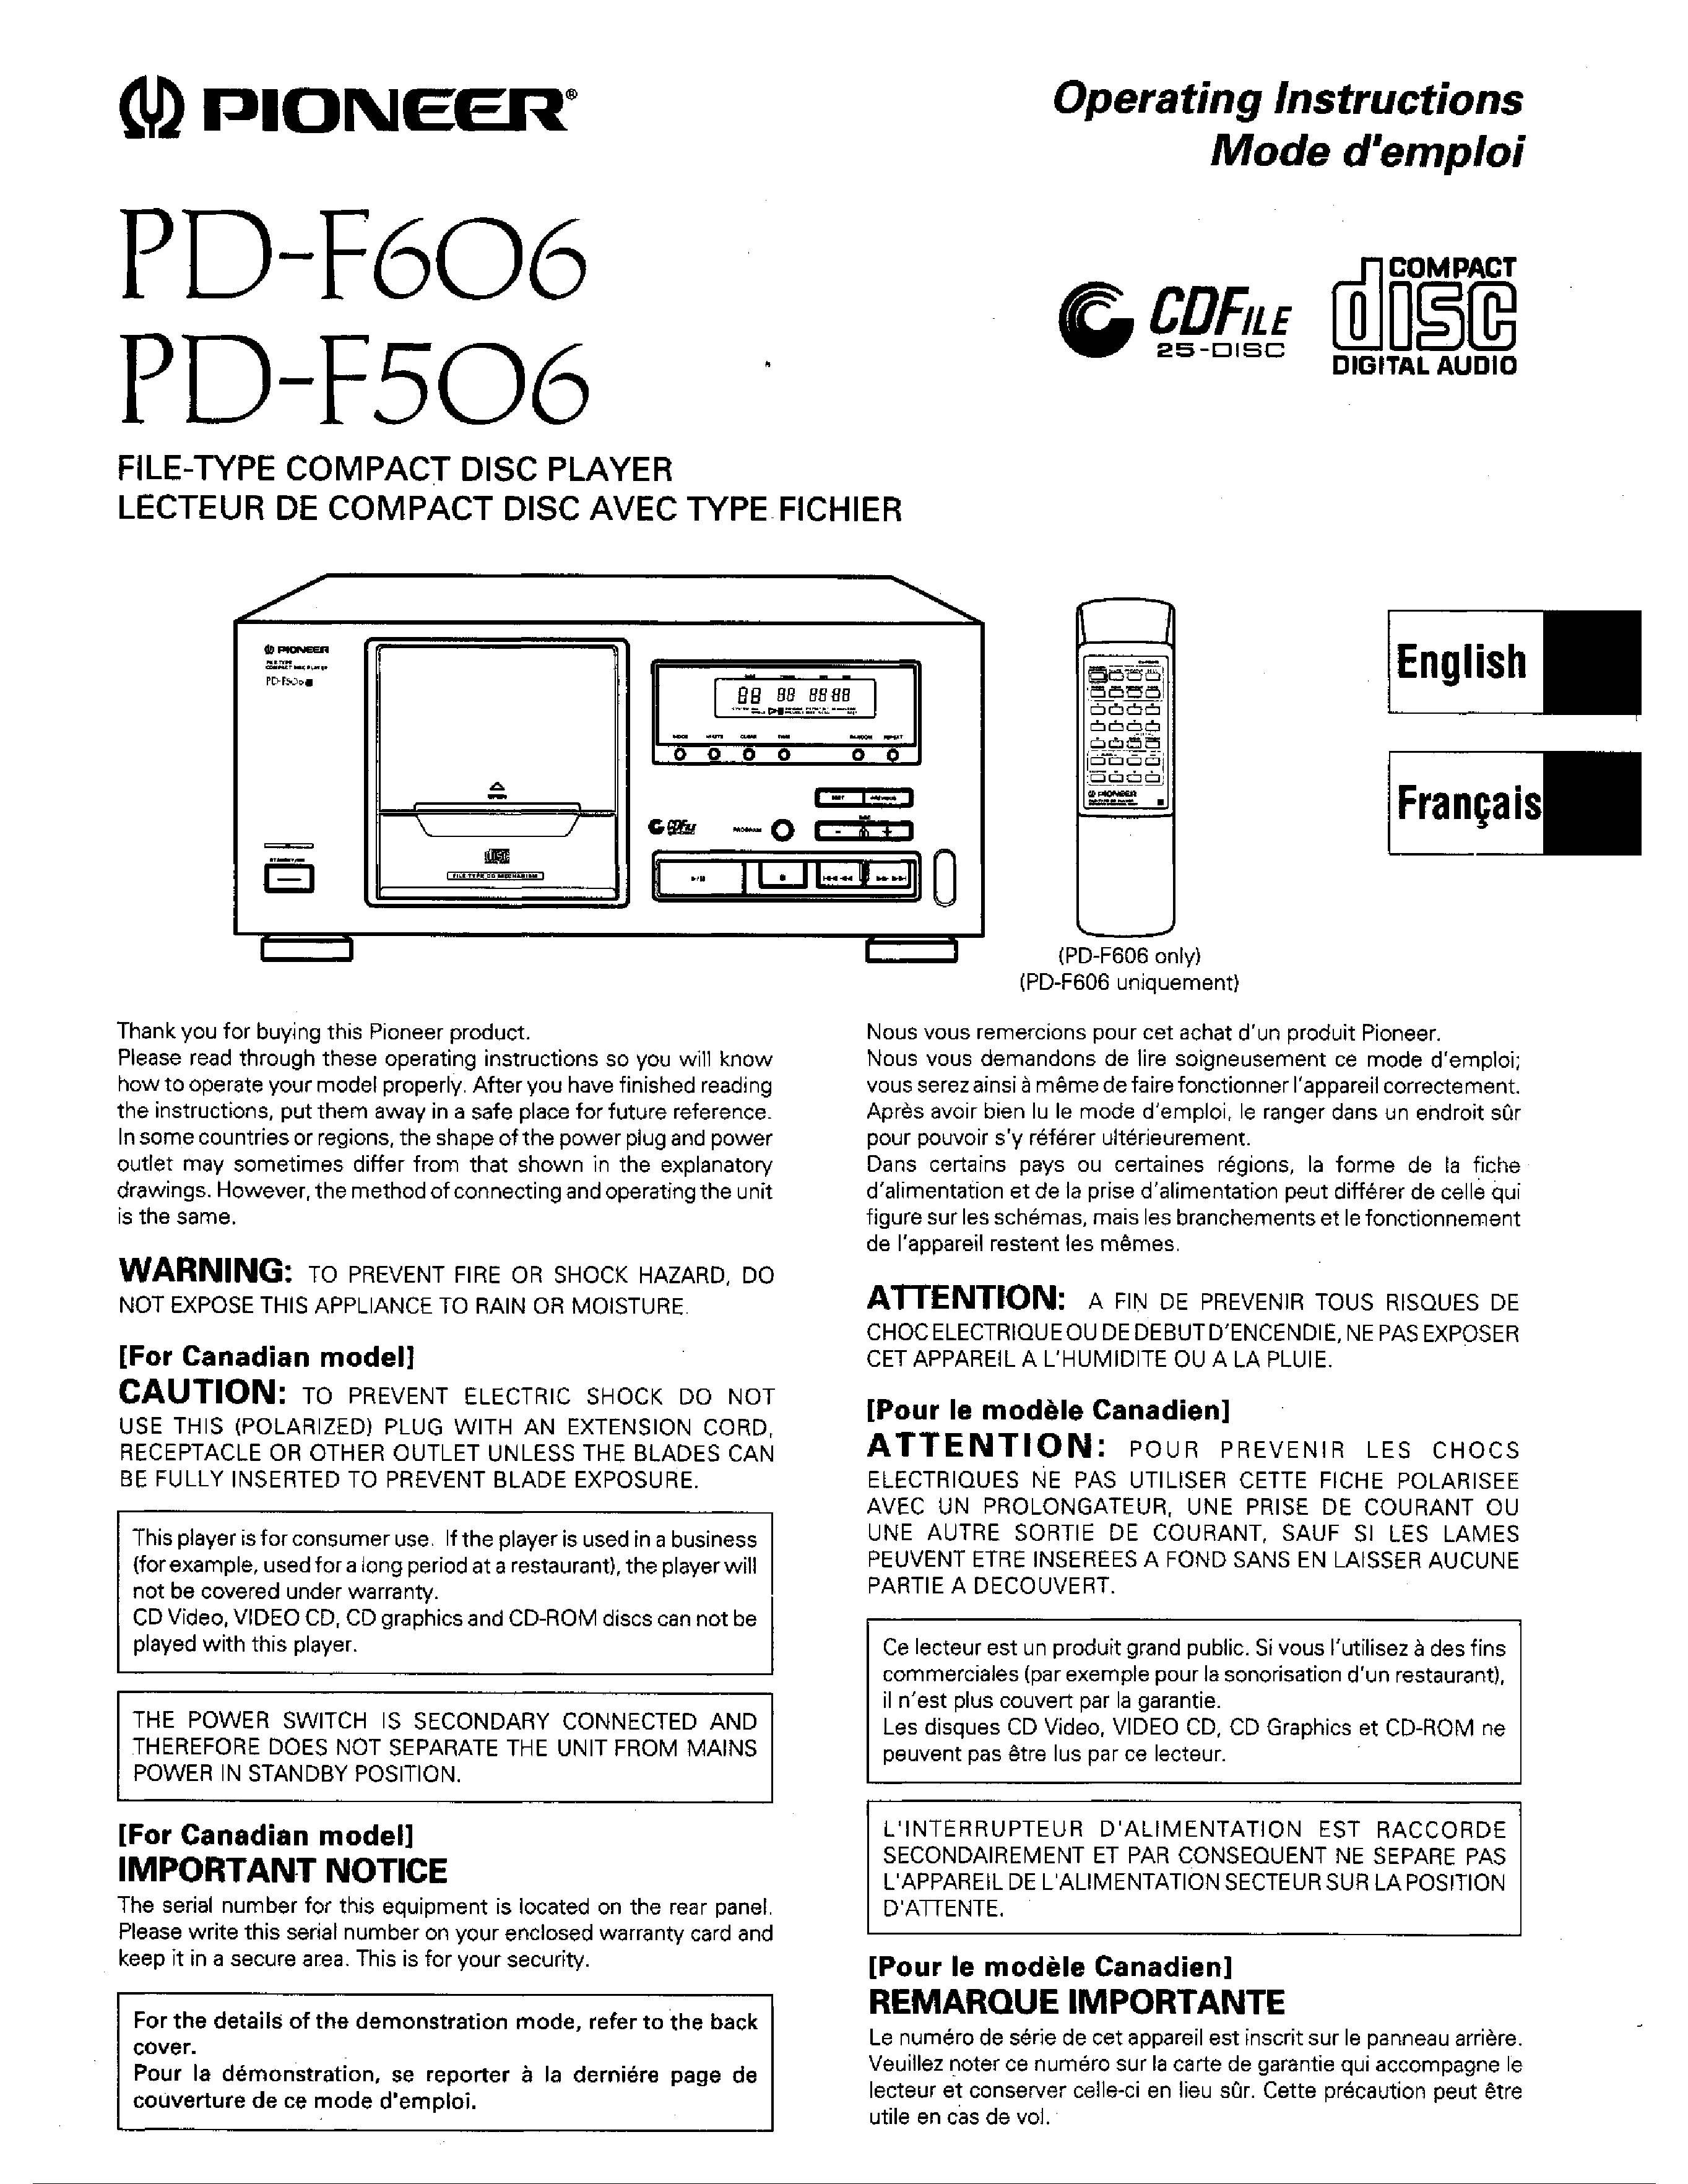 Pioneer PD-F606